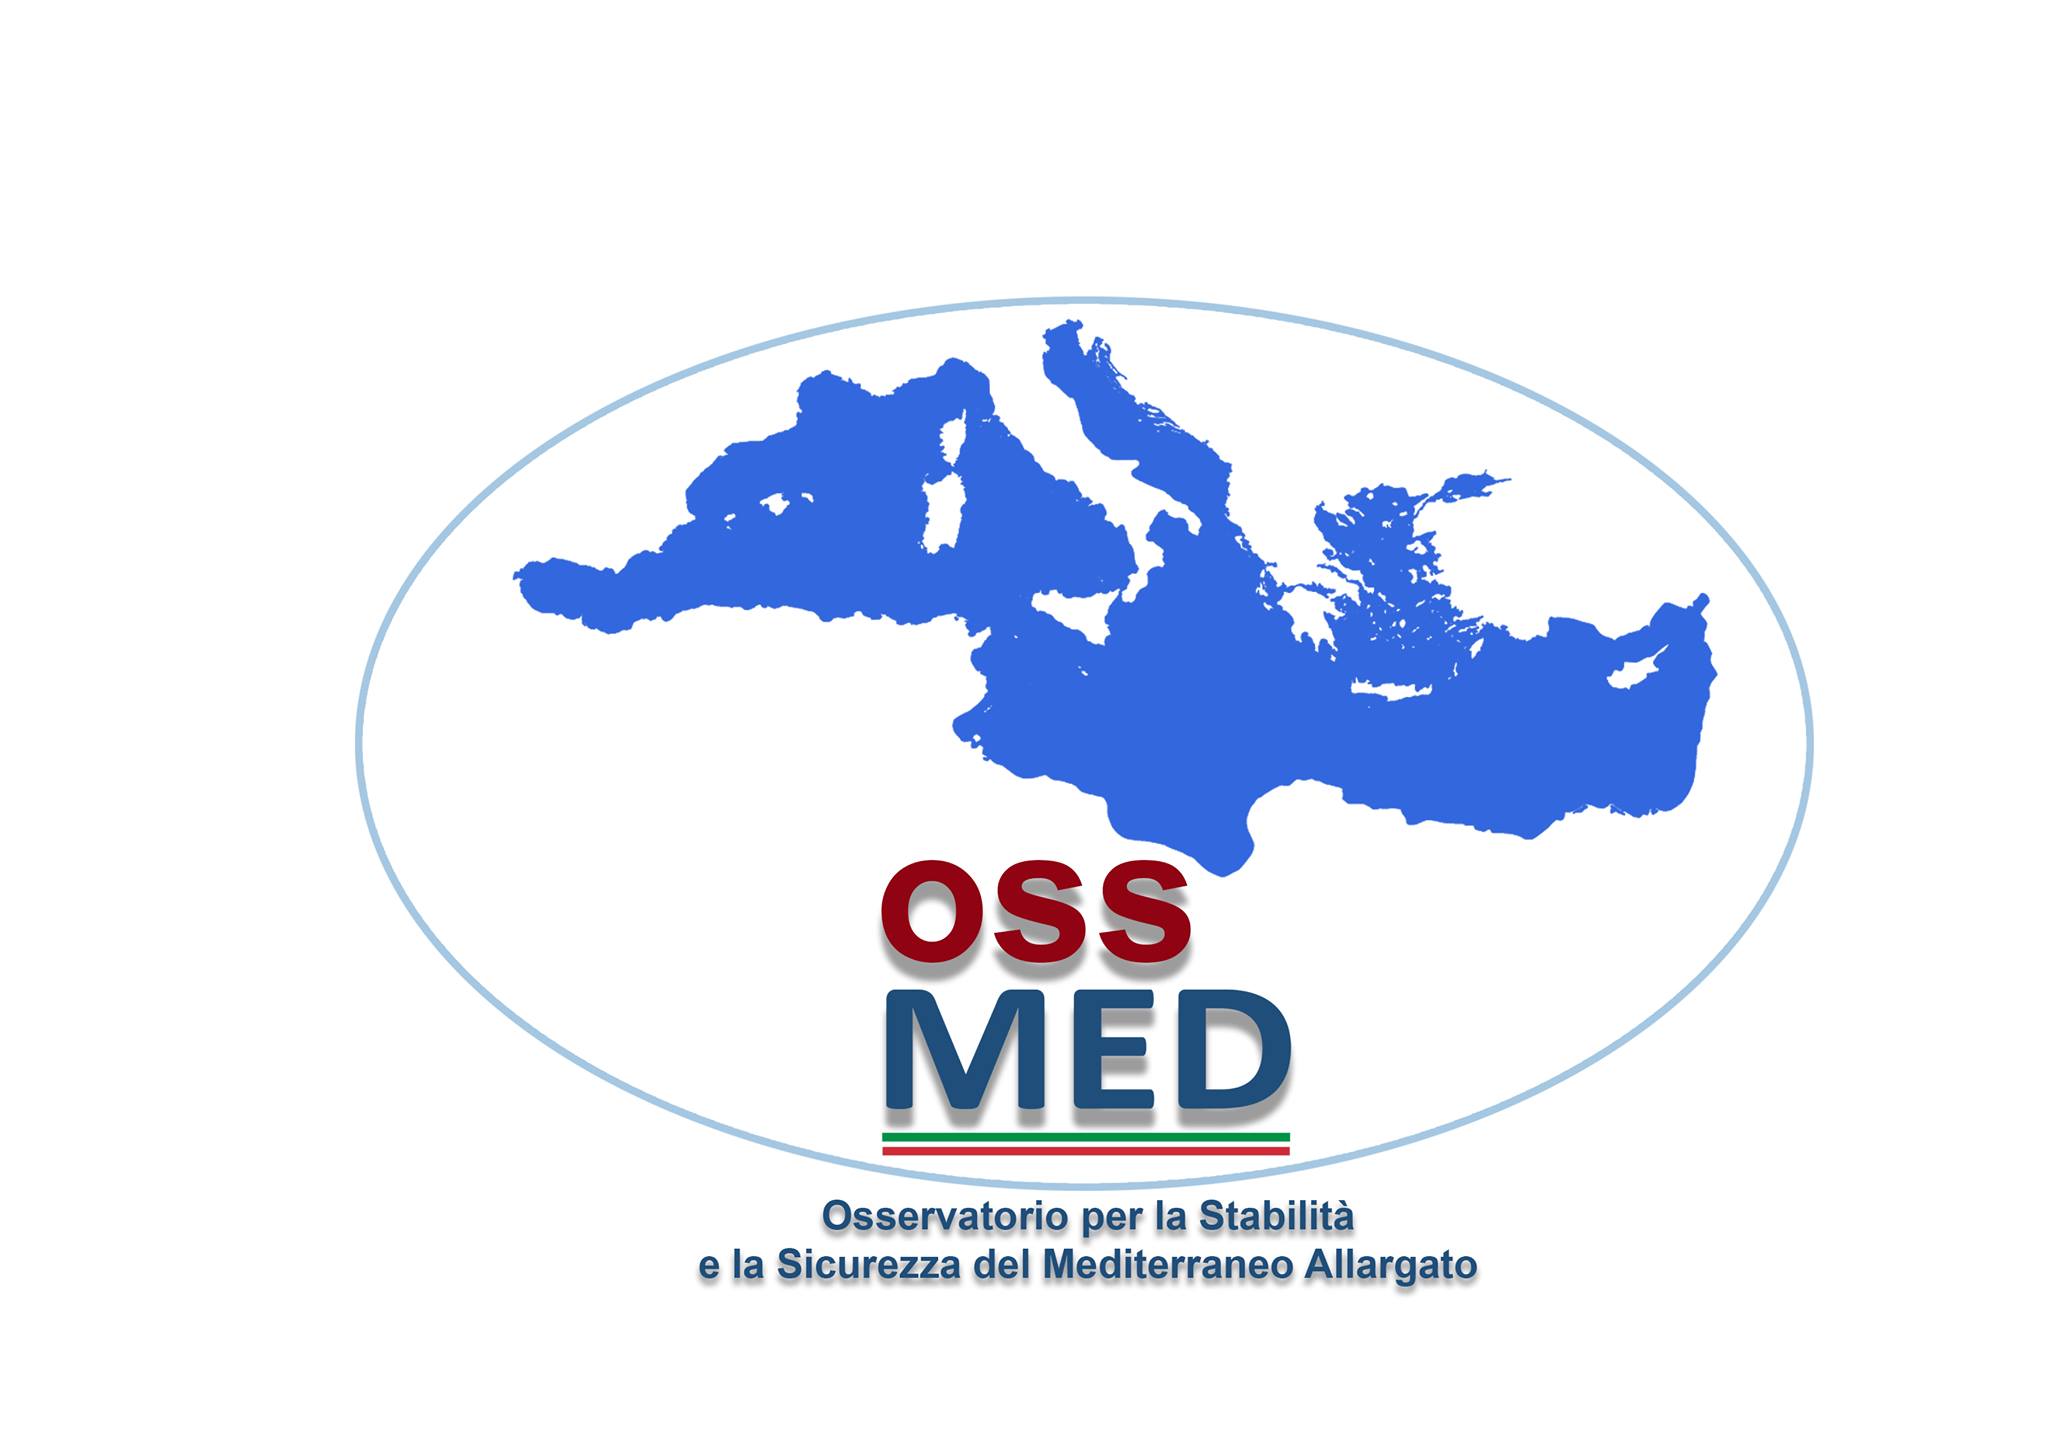 ossmed osservatorio mediterraneo